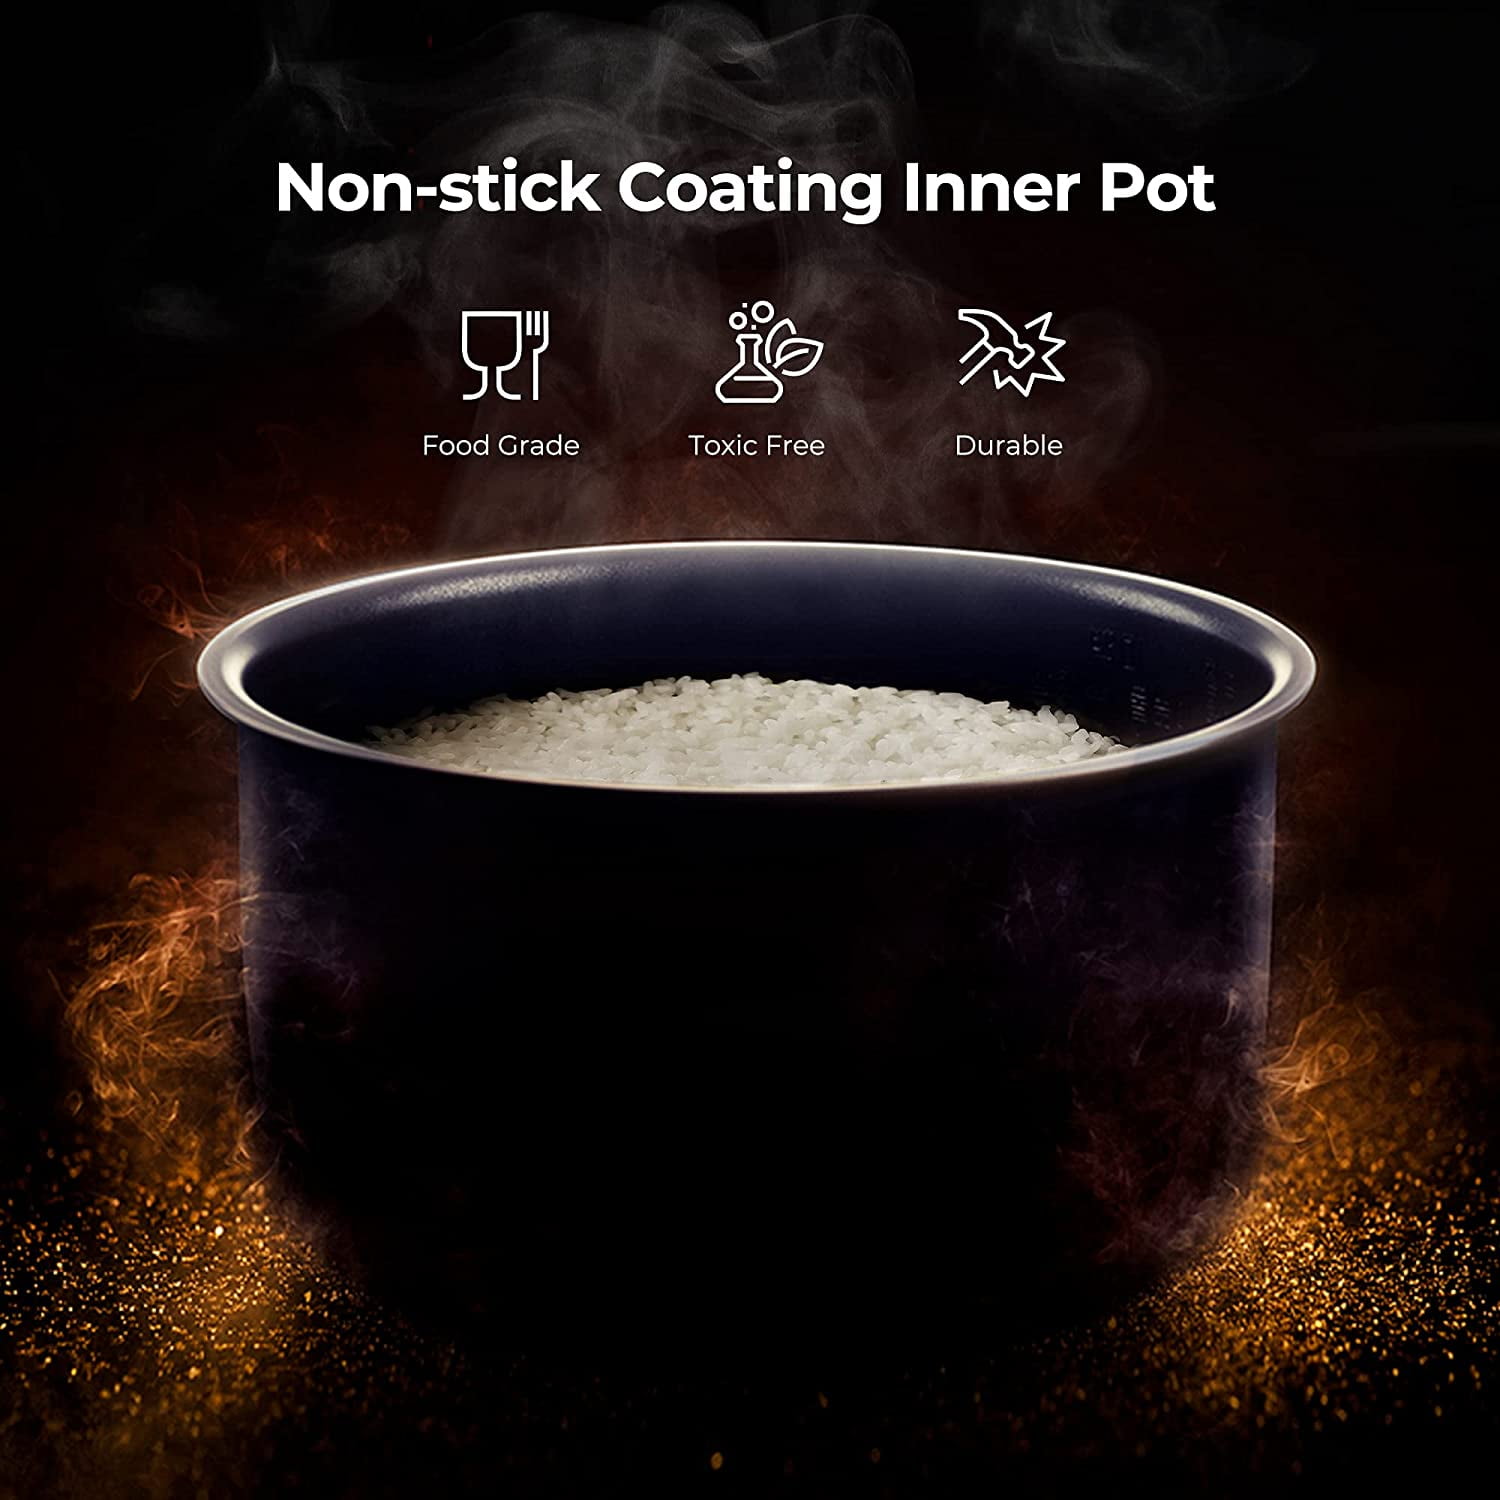 CUCKOO CR-0632F, 6-Cup (Uncooked) Micom Rice Cooker, 9 Menu Options,  Nonstick Inner Pot, Made in Korea